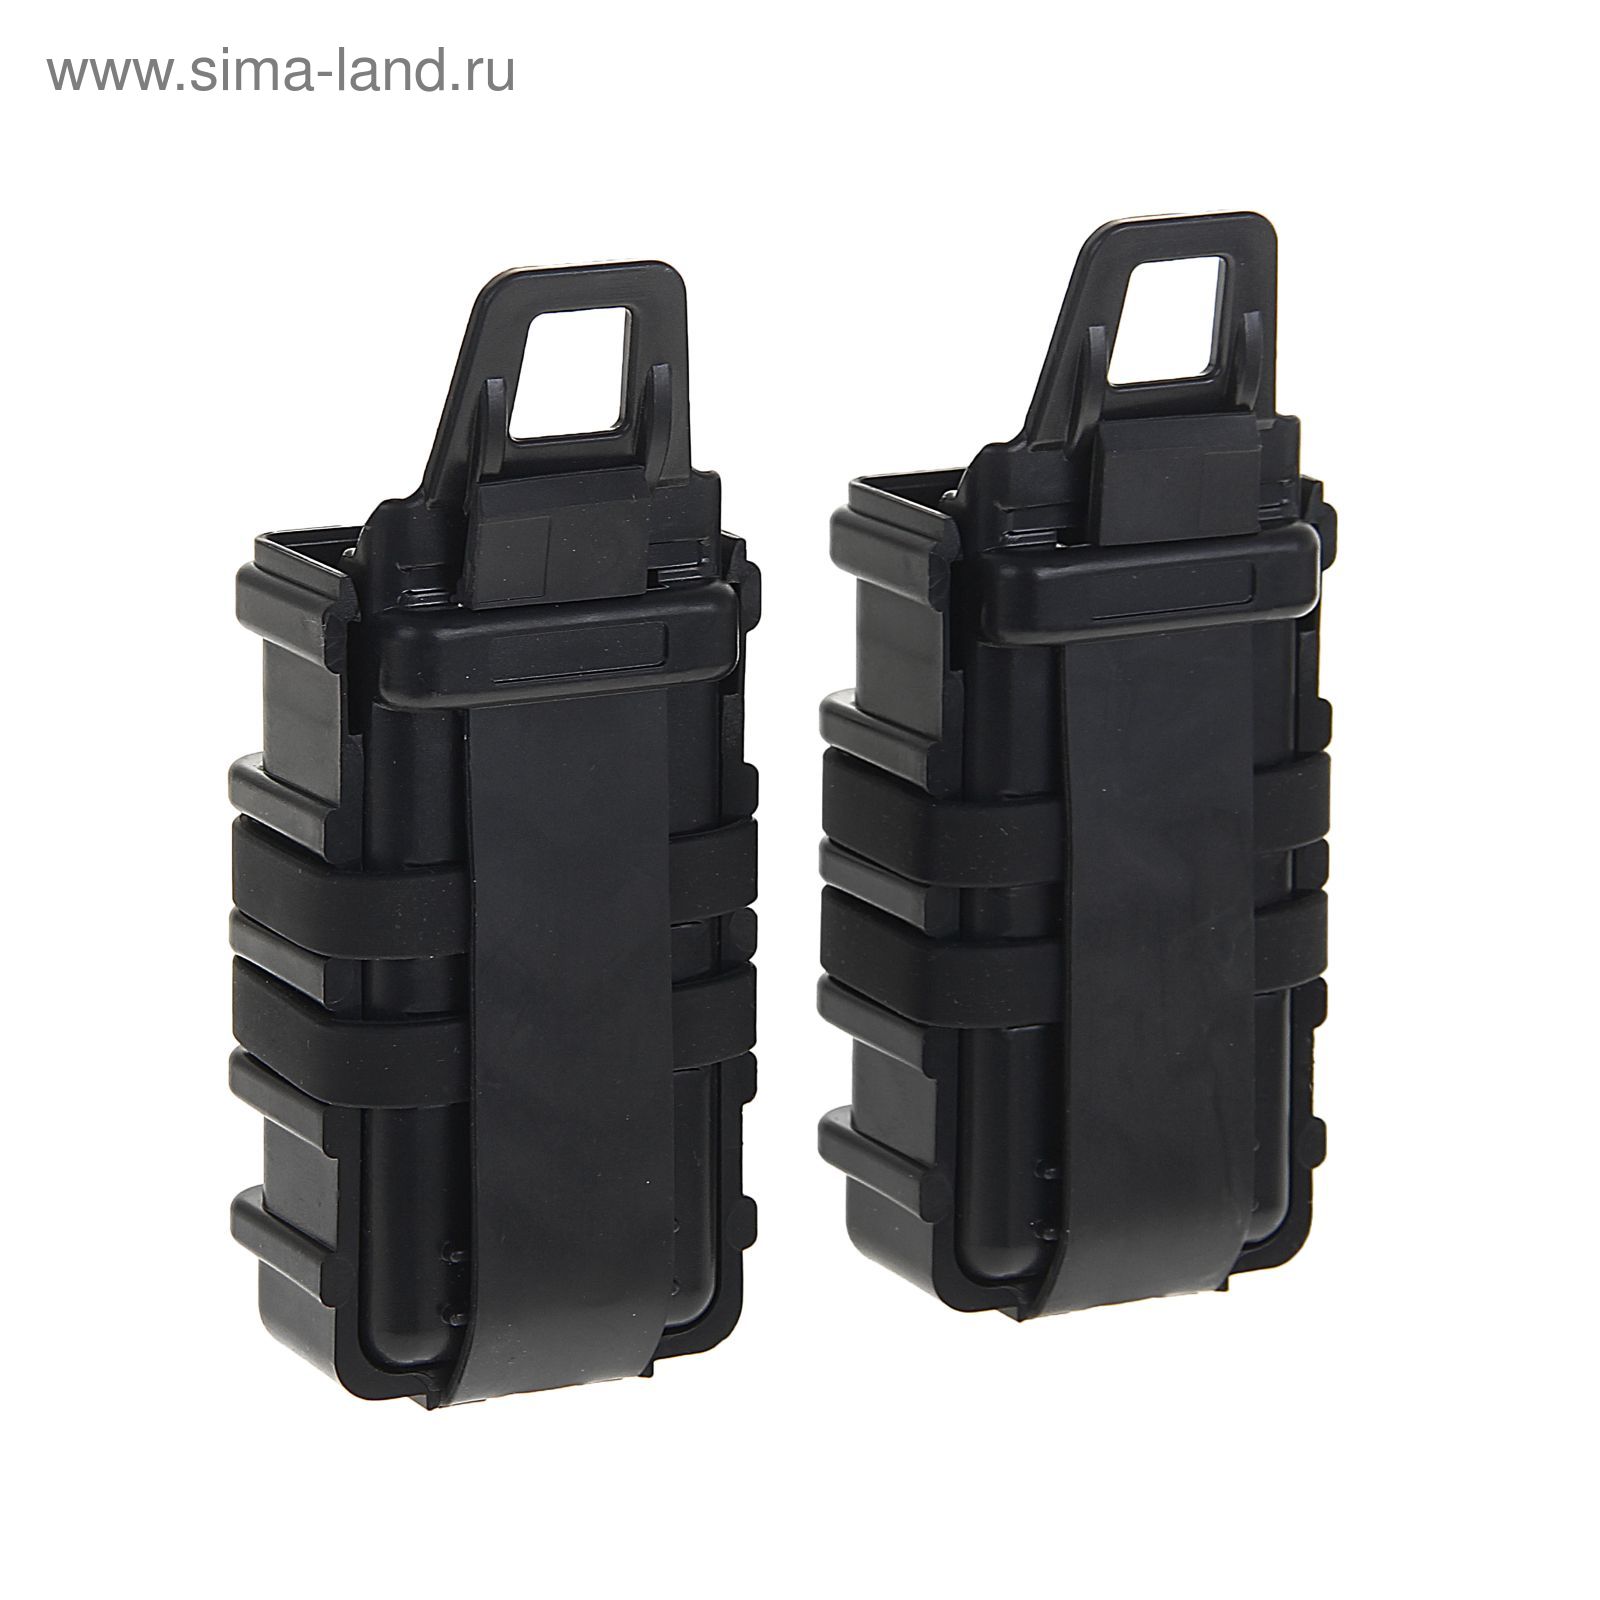 Подсумок Fast Mag accessory box of vest (S SIZE) Black MG-03-BK